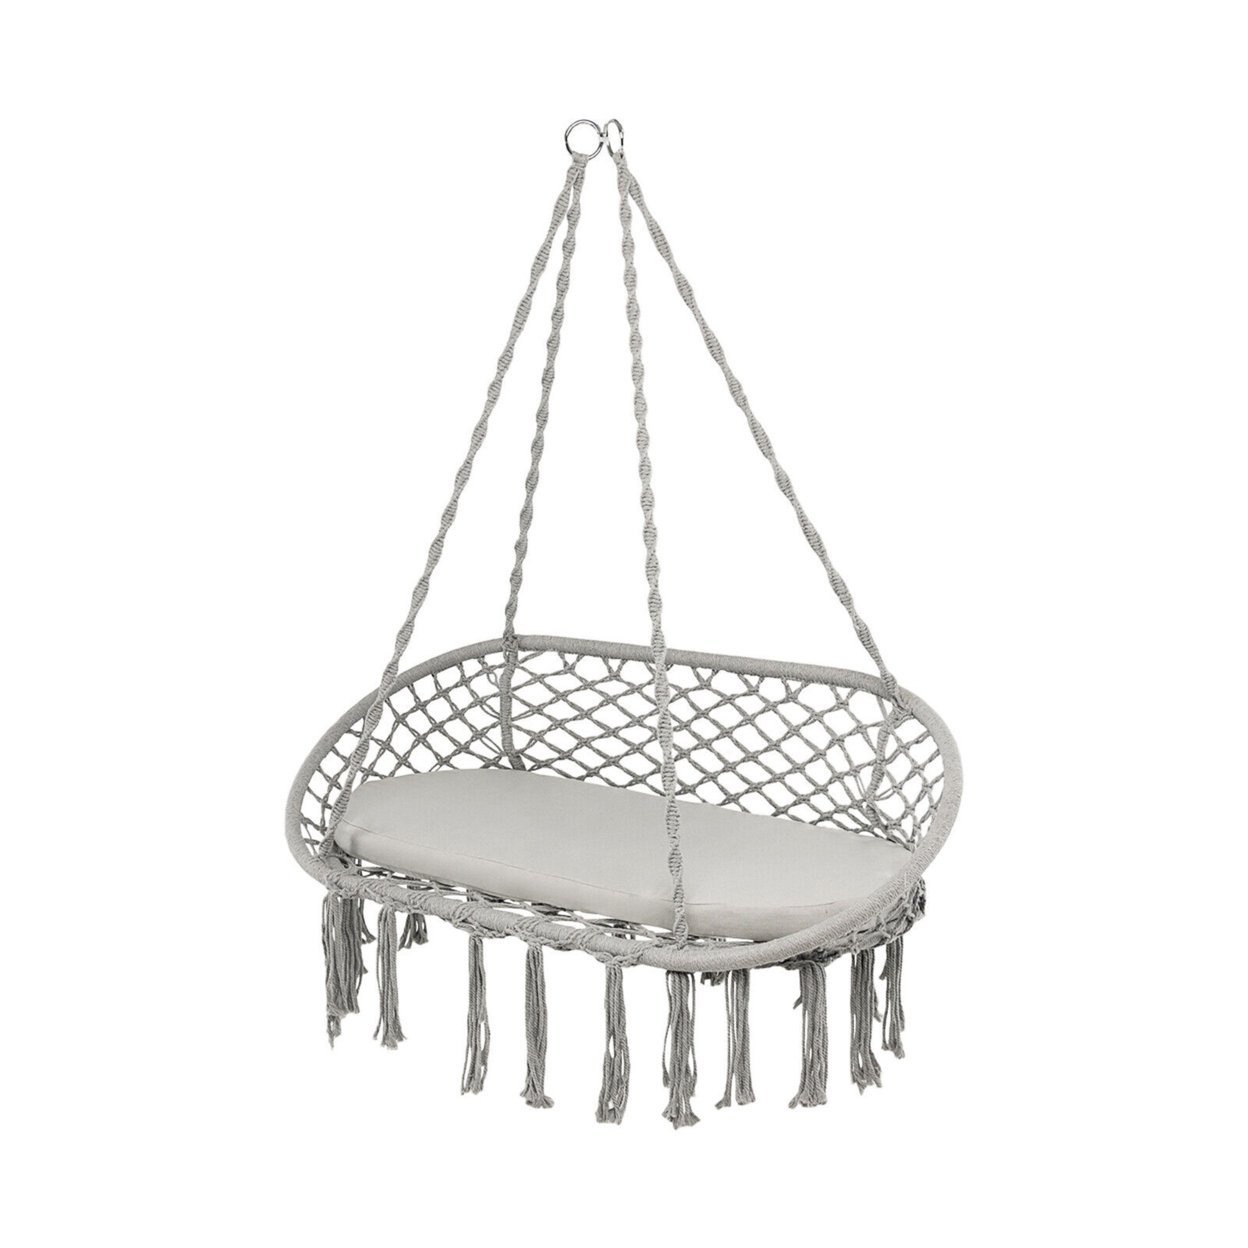 2 Person Hanging Hammock Chair W/ Cushion Macrame Swing 330 Lbs Capacity Grey